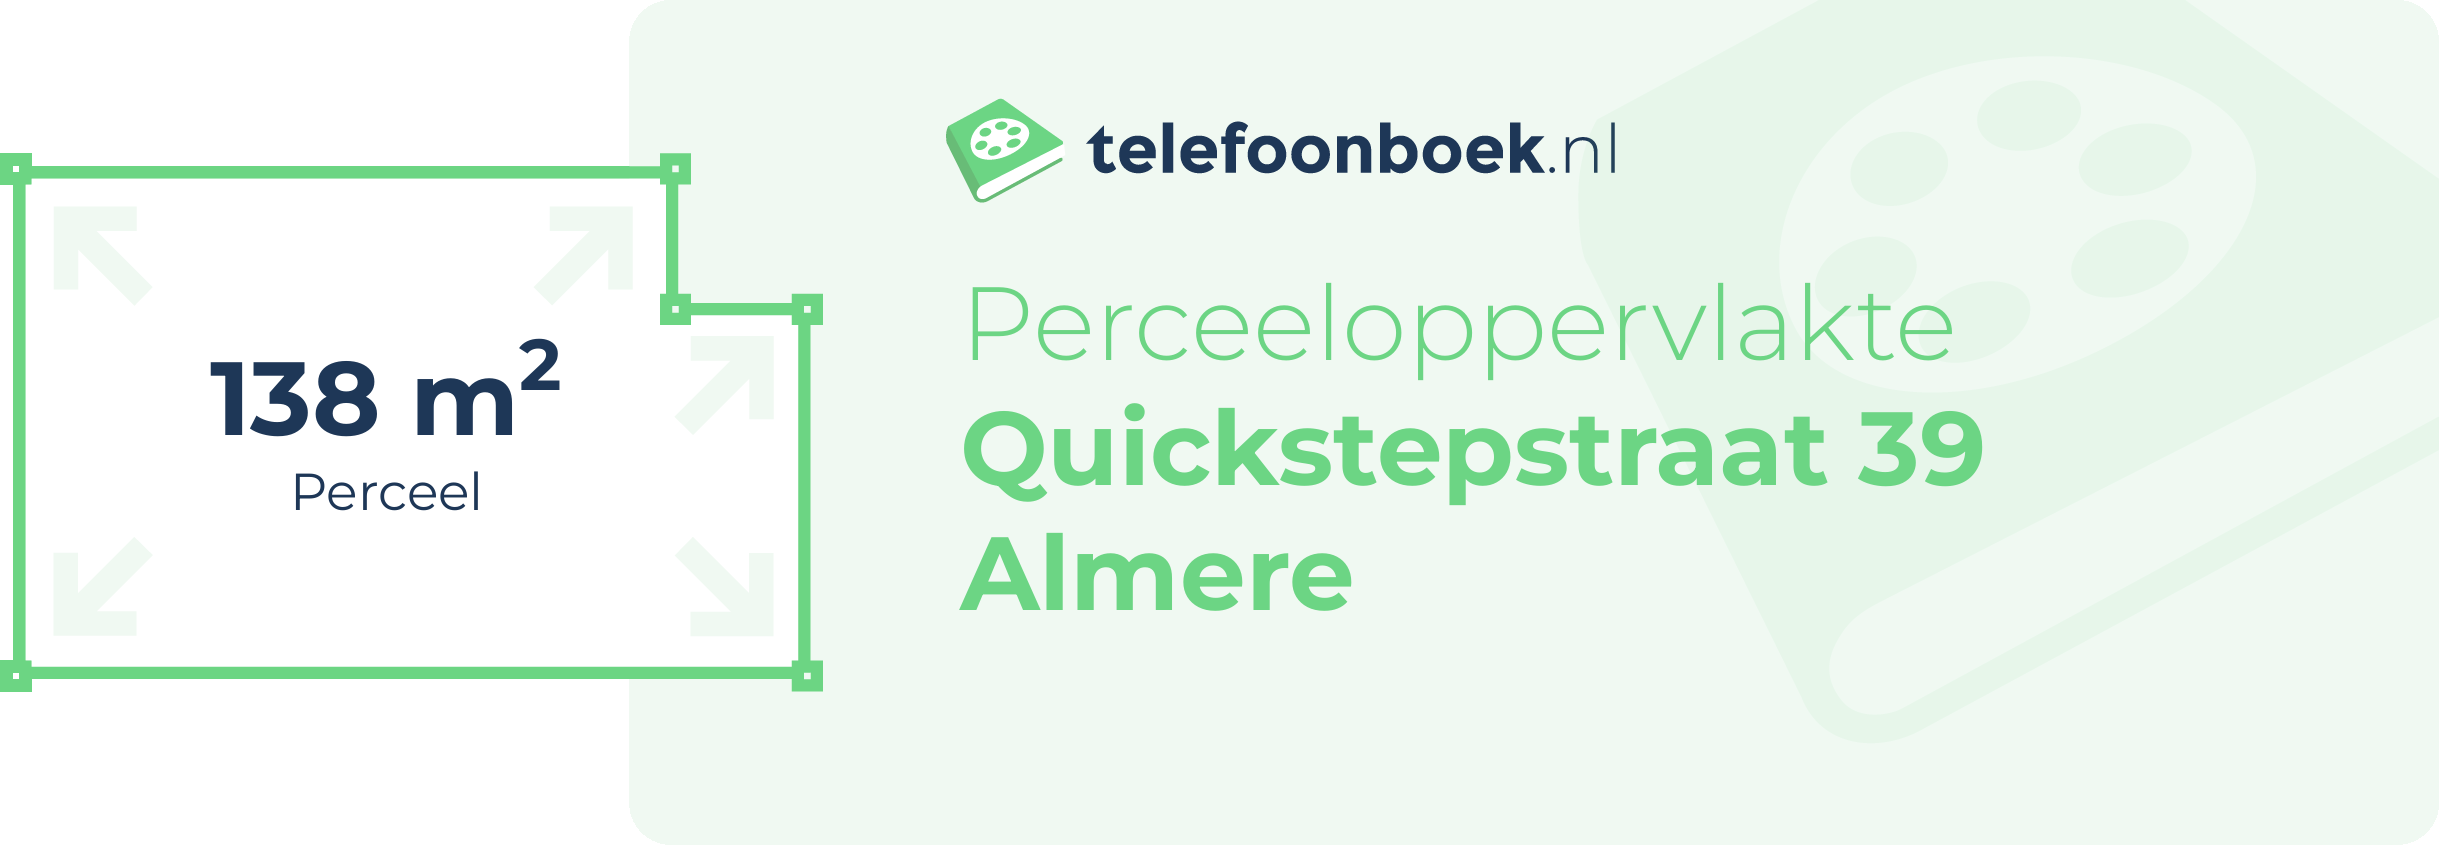 Perceeloppervlakte Quickstepstraat 39 Almere